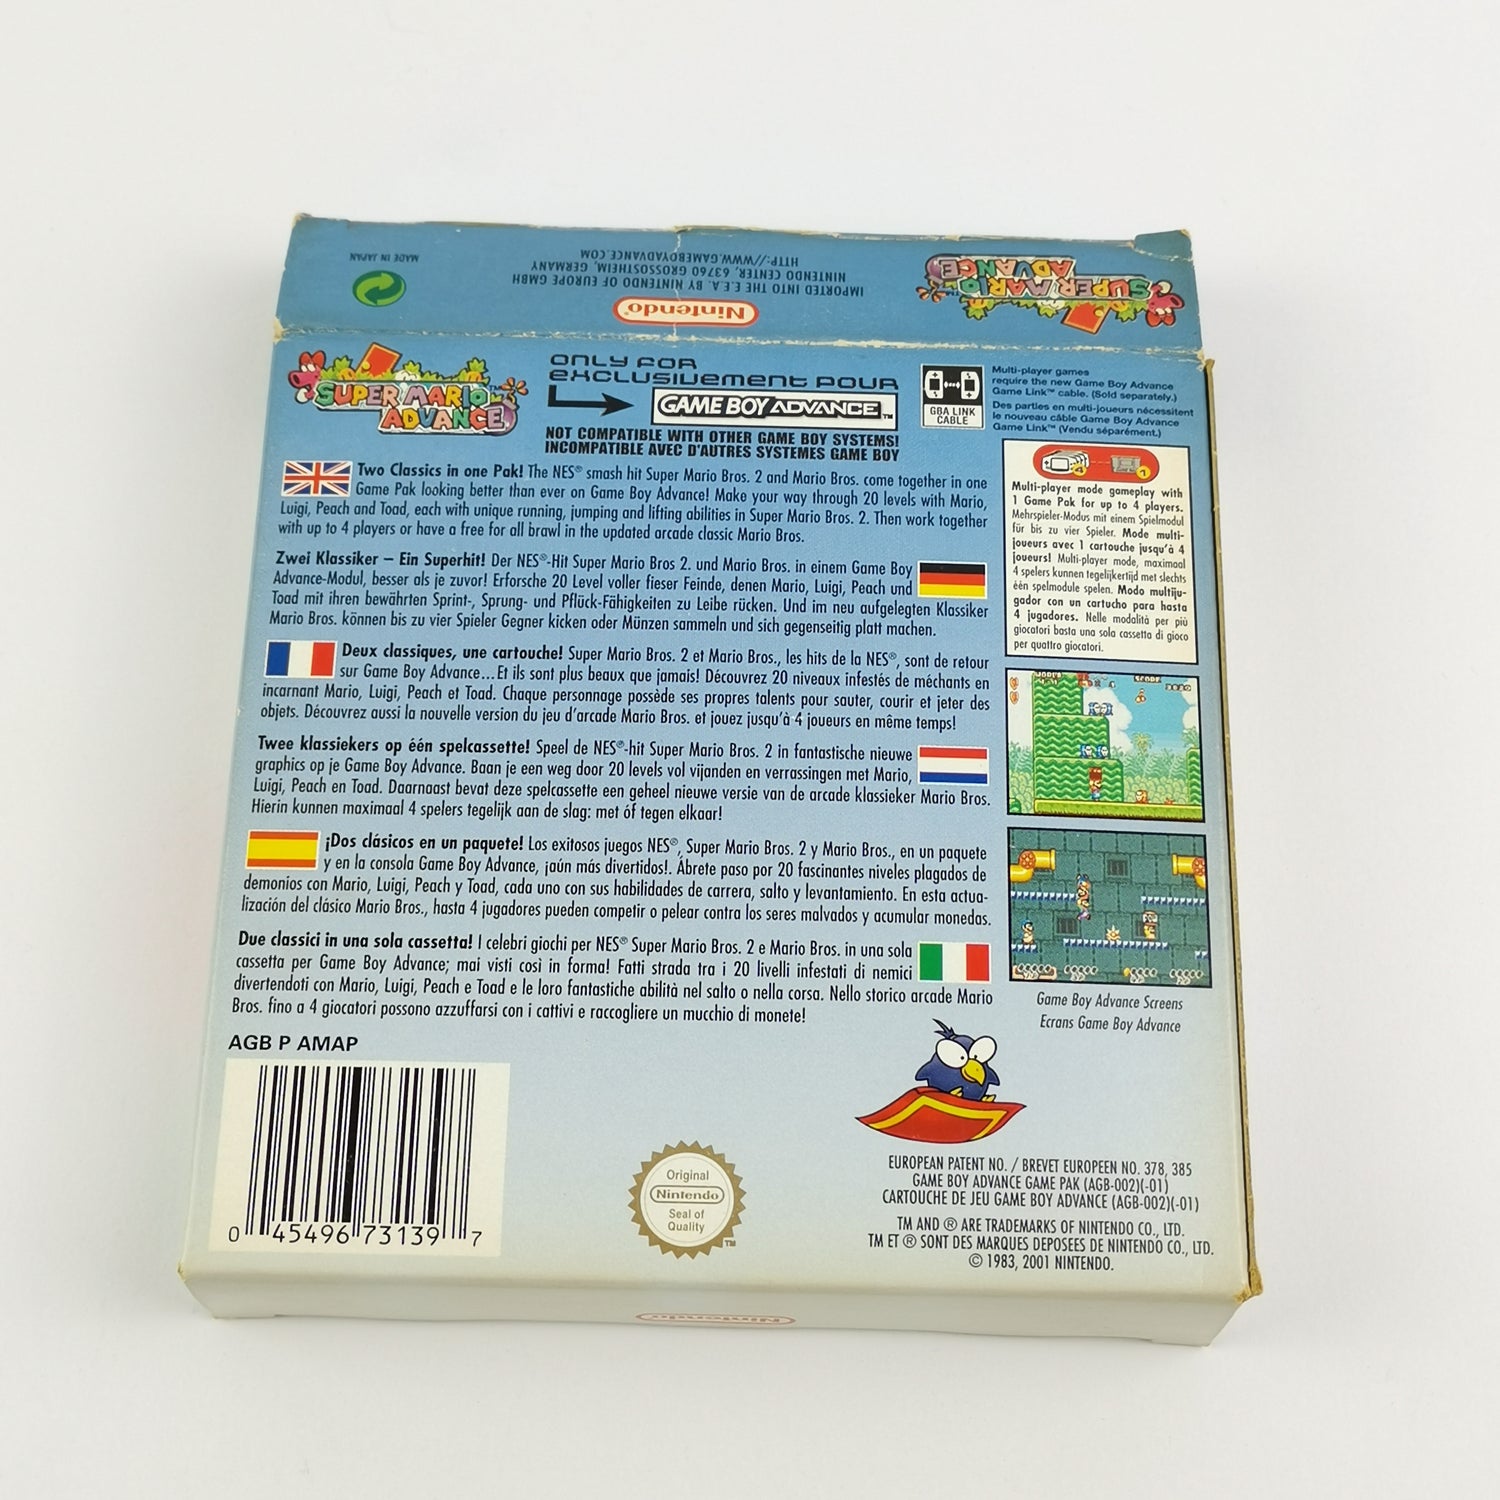 Nintendo Game Boy Advance Game: Super Mario Bros 2 Advance - OVP Instructions GBA